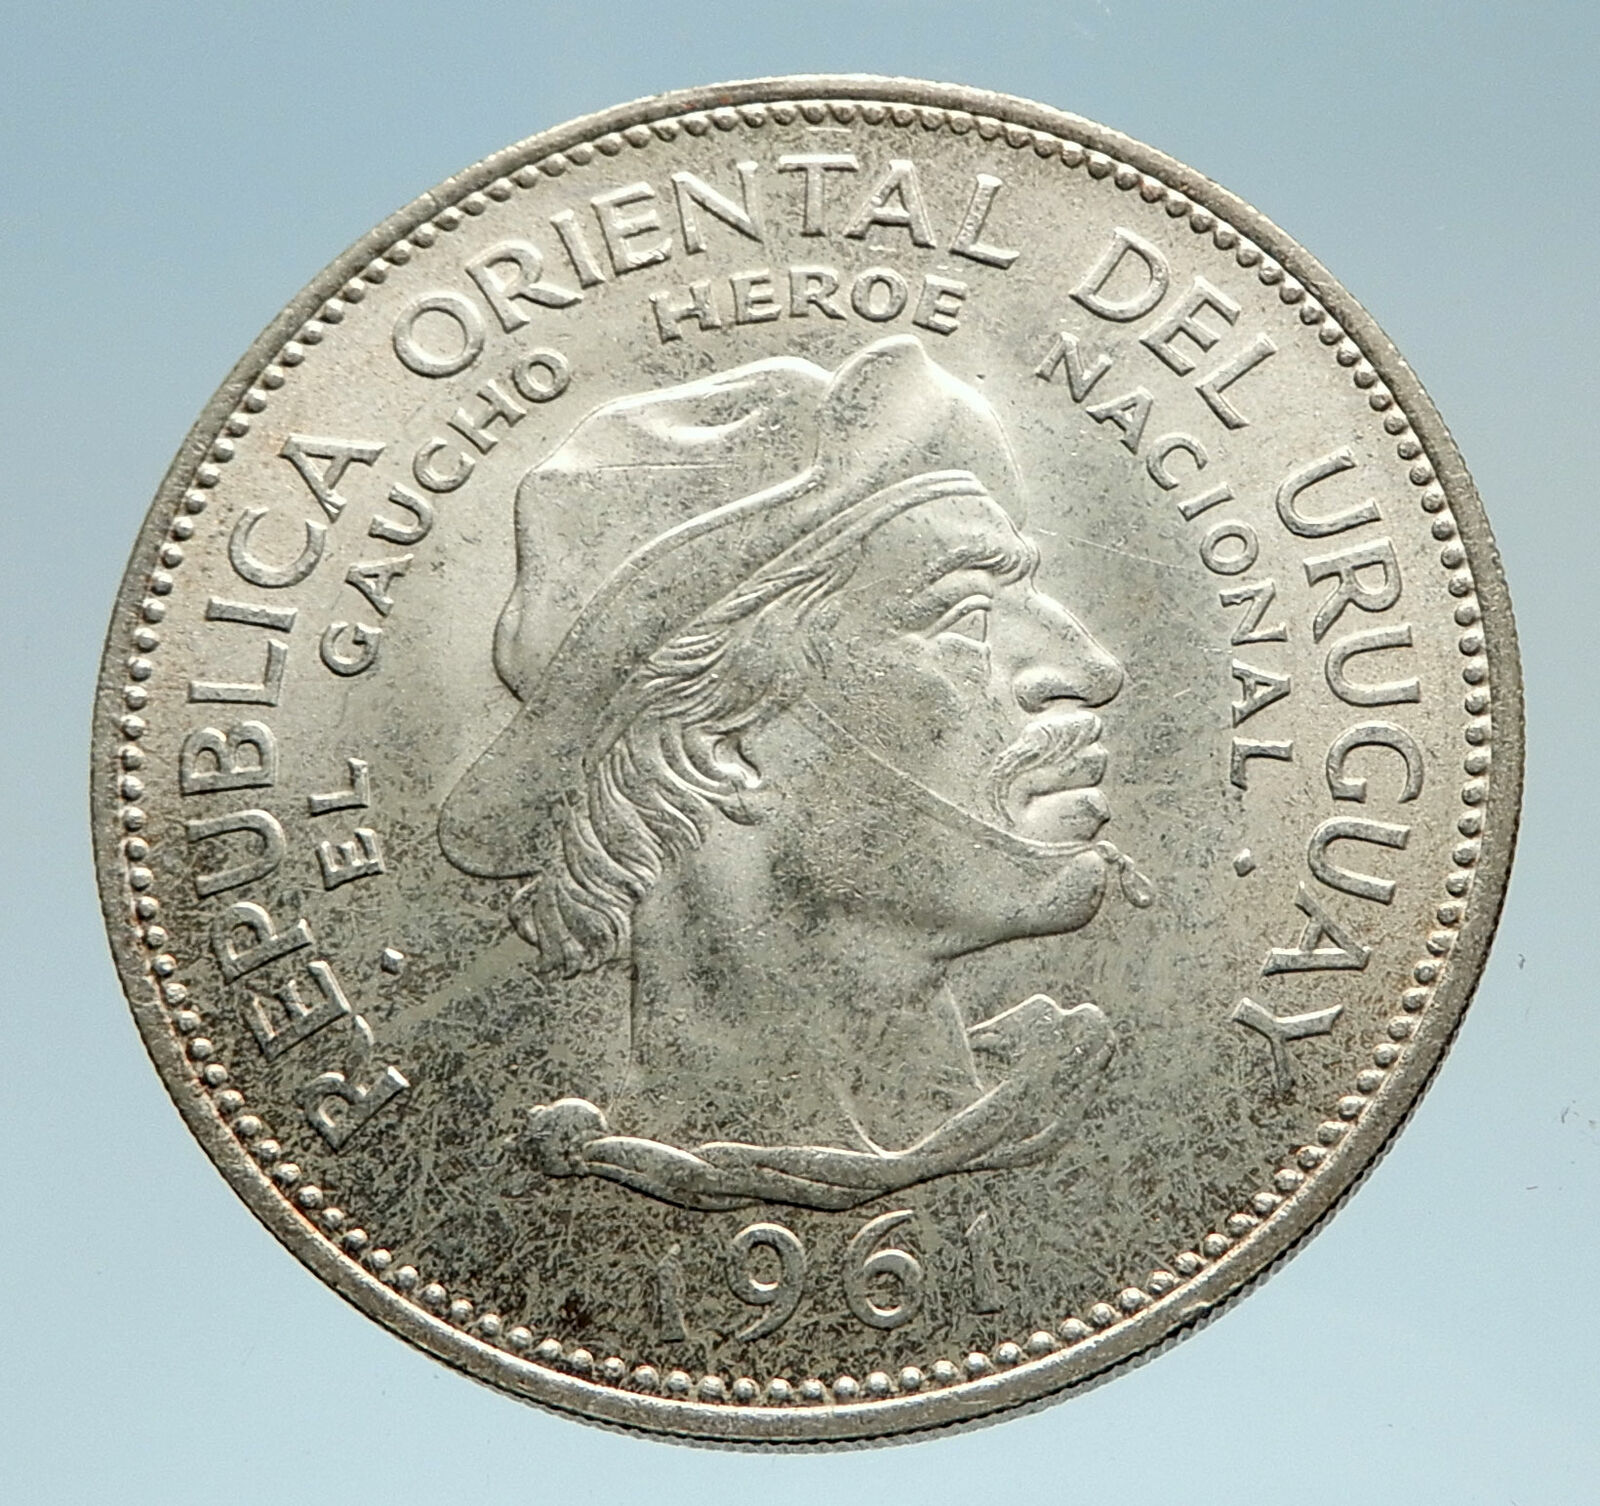 1961 URUGUAY w El Caucho Hero Against Spain Genuine Silver 10 Pesos Coin i75232